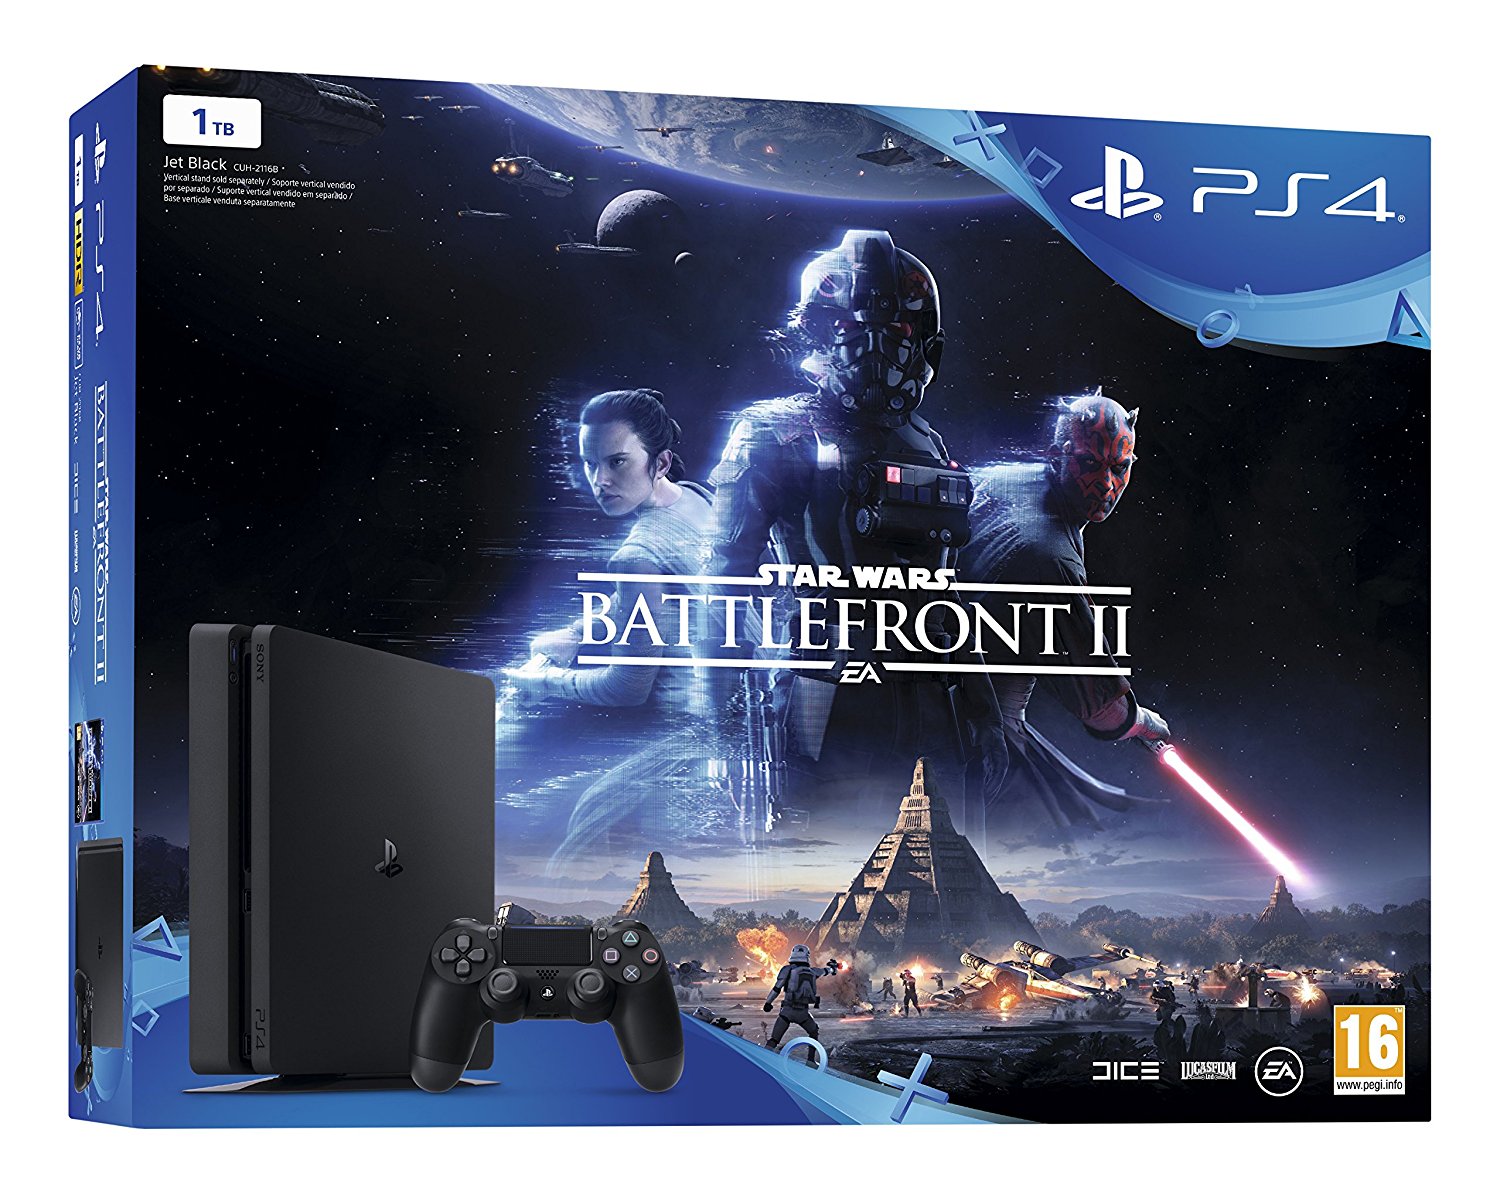 Pack PlayStation 4 Slim 1TB + Star Wars Battlefront II